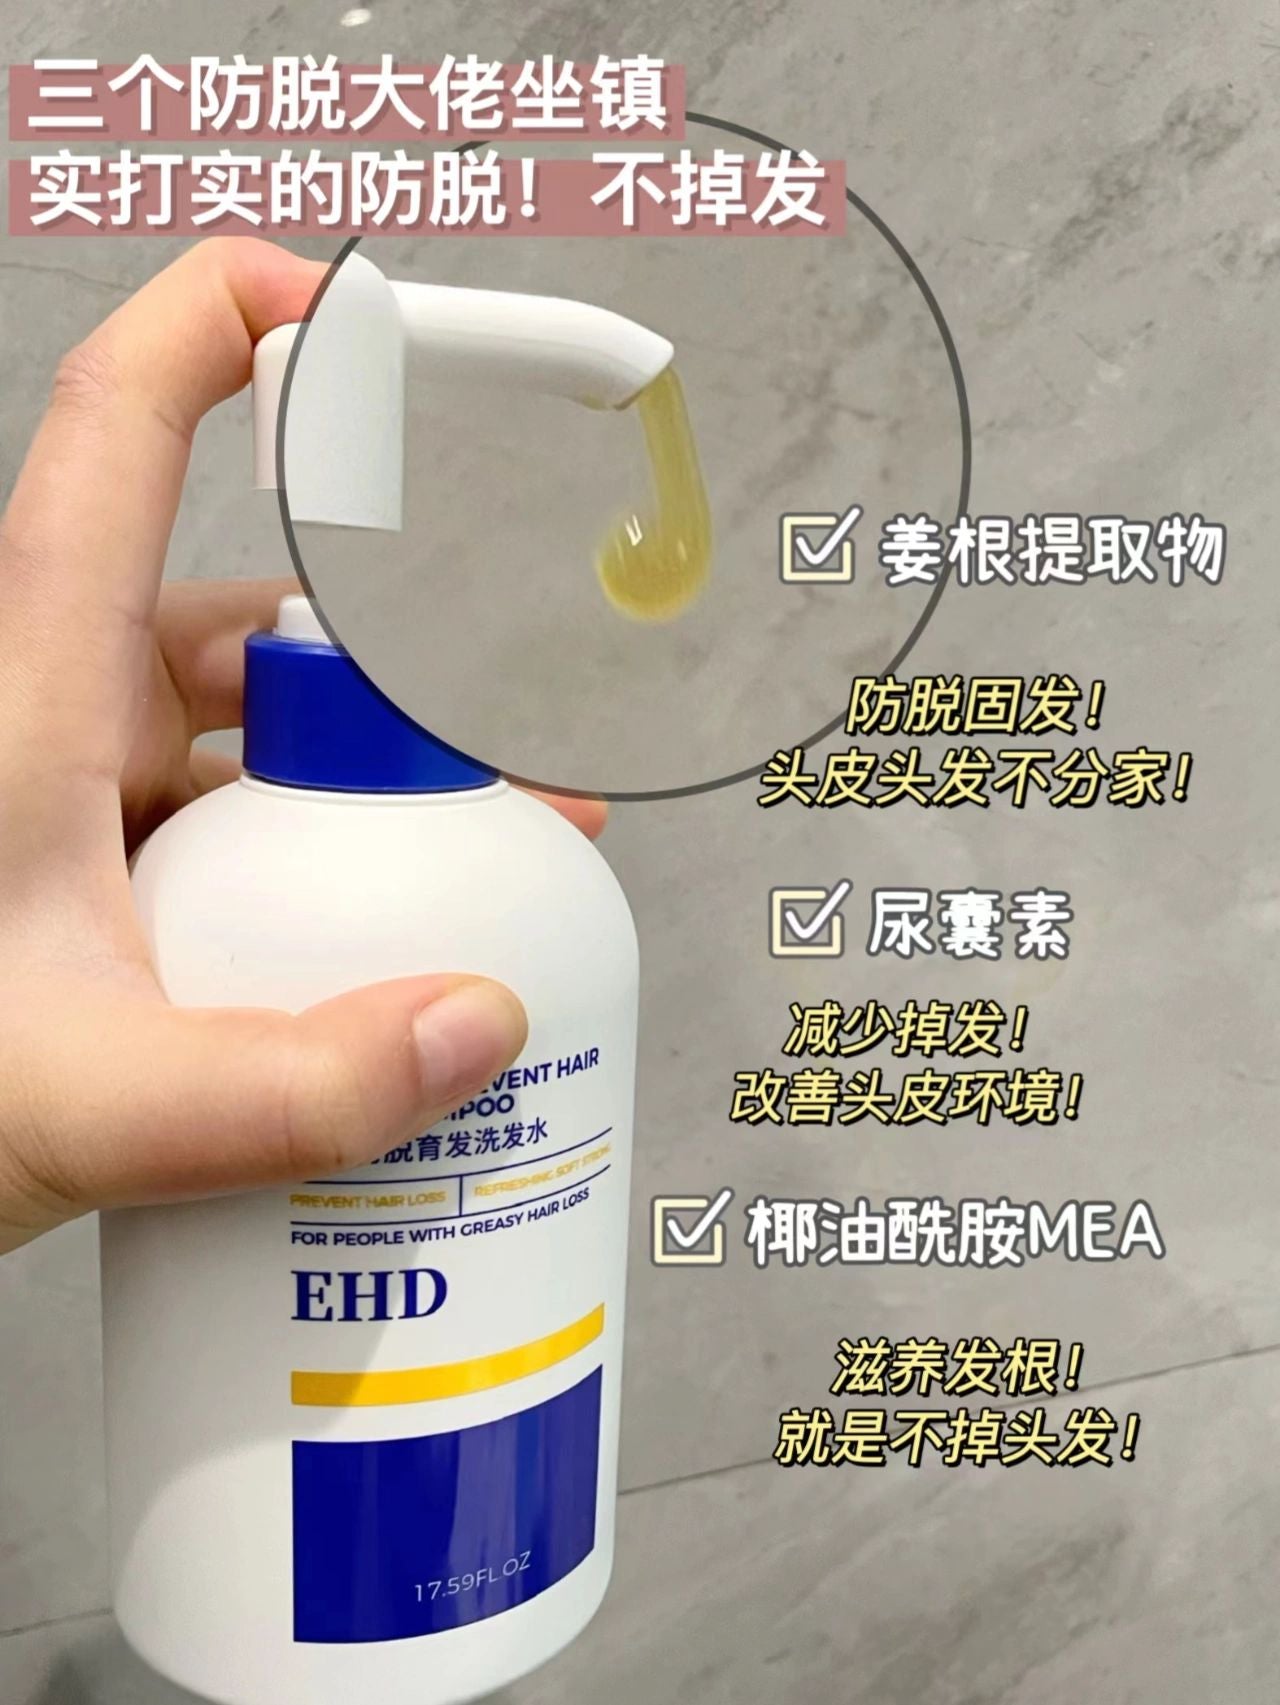 EHD Prevent Hair Loss Shampoo Conditioner 500ml EHD防脱育发洗发水护发素